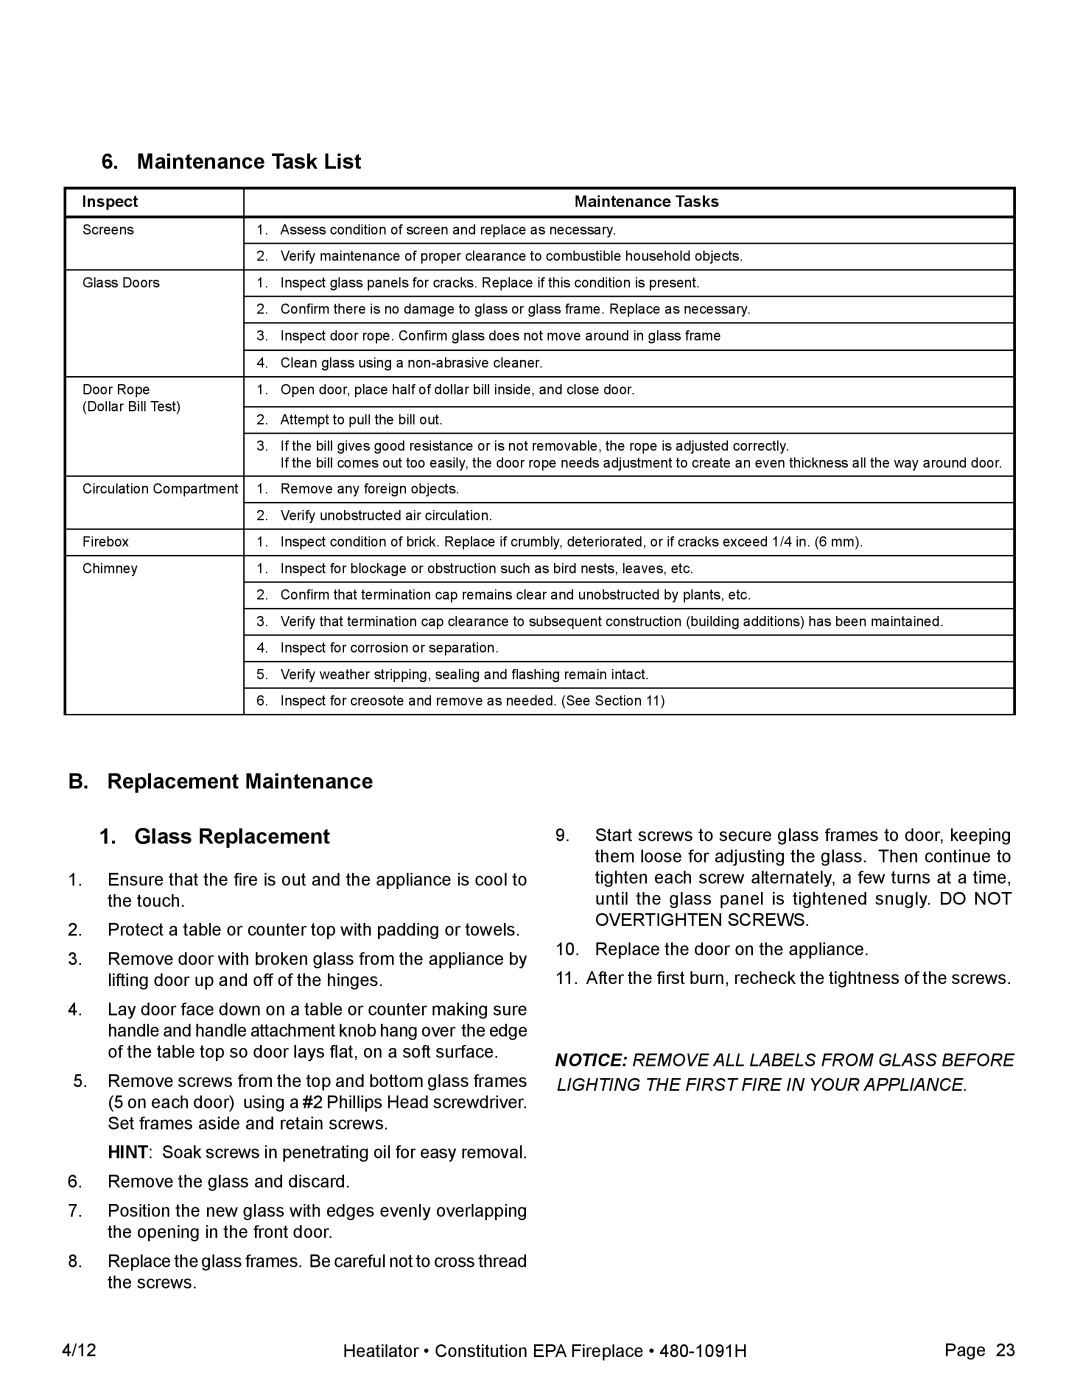 Heatiator C40 owner manual Maintenance Task List, B. Replacement Maintenance 1.Glass Replacement 